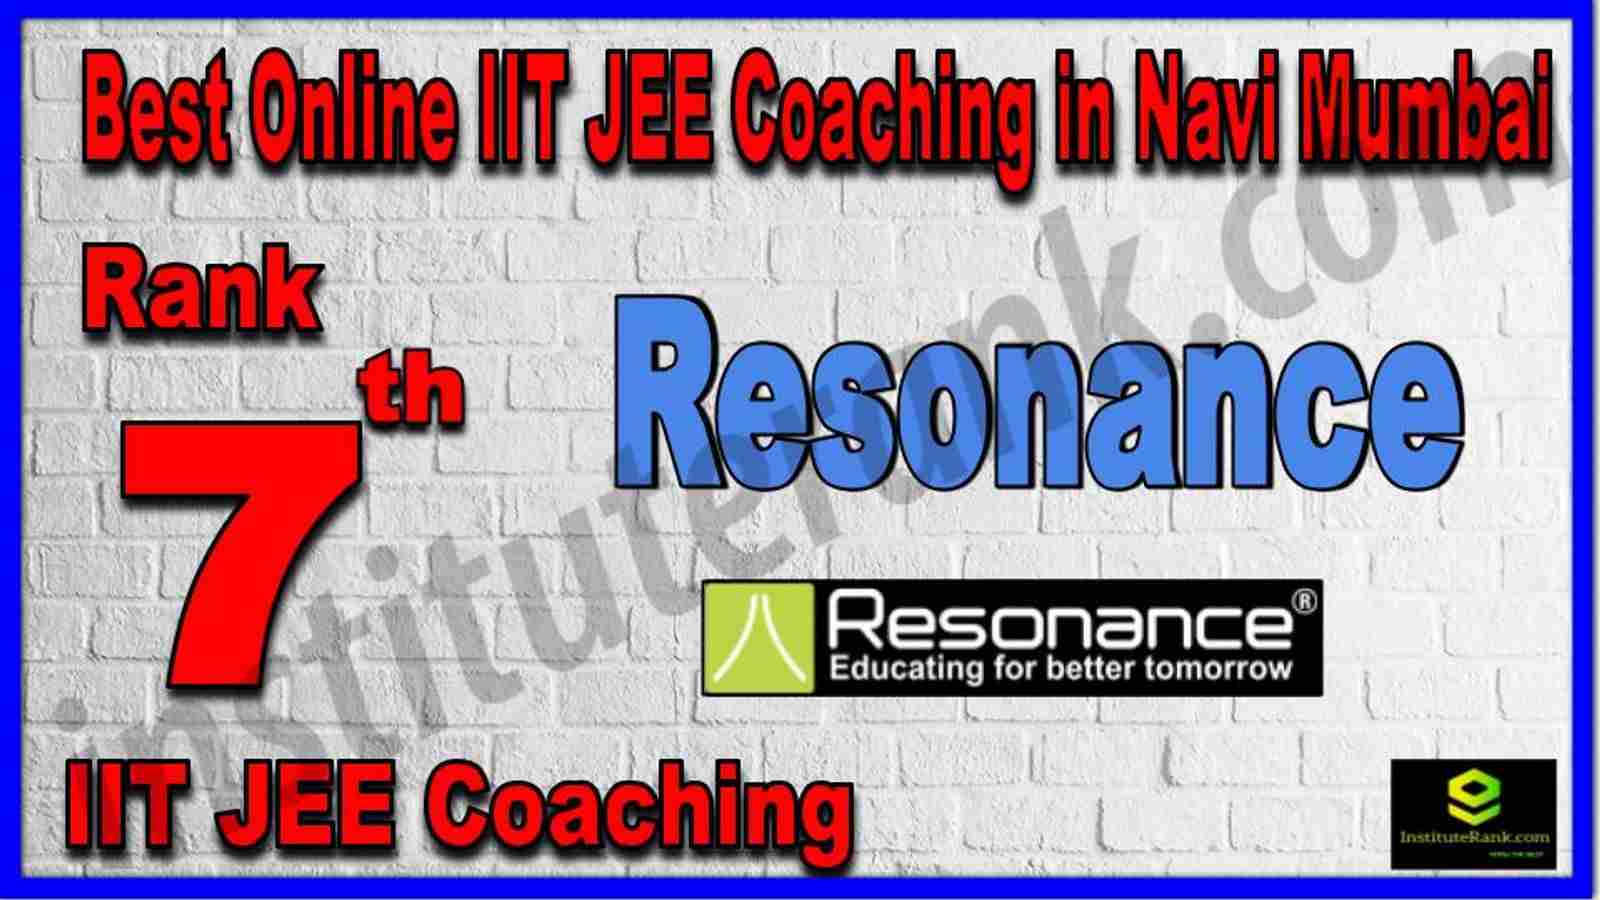 Rank 7th Best Online IIT JEE Coaching in Navi Mumbai